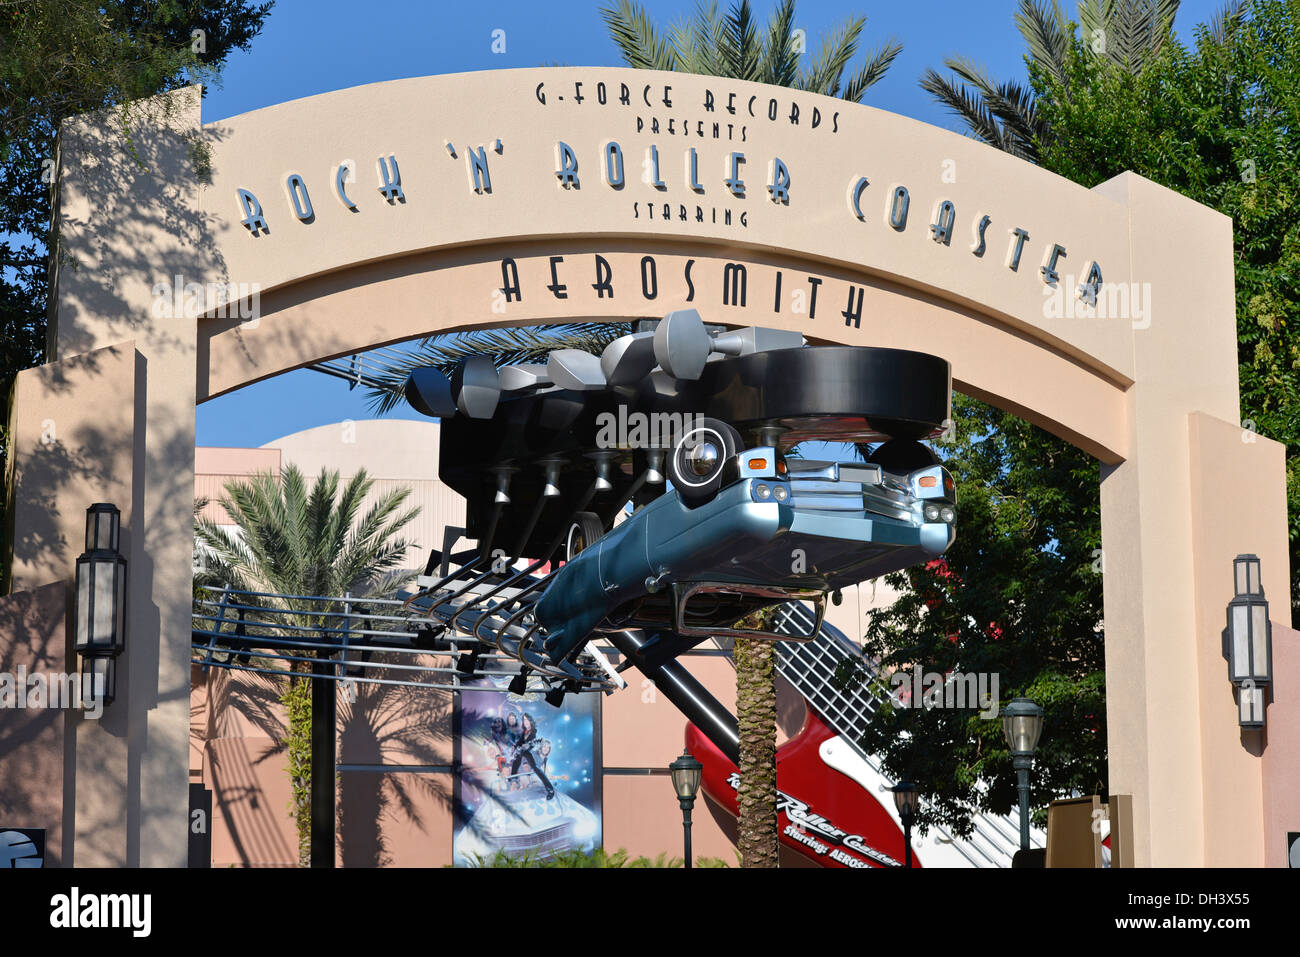 Rock N Roller Coaster Aerosmith en Hollywood Studios, Disney World, Orlando, Florida Foto de stock